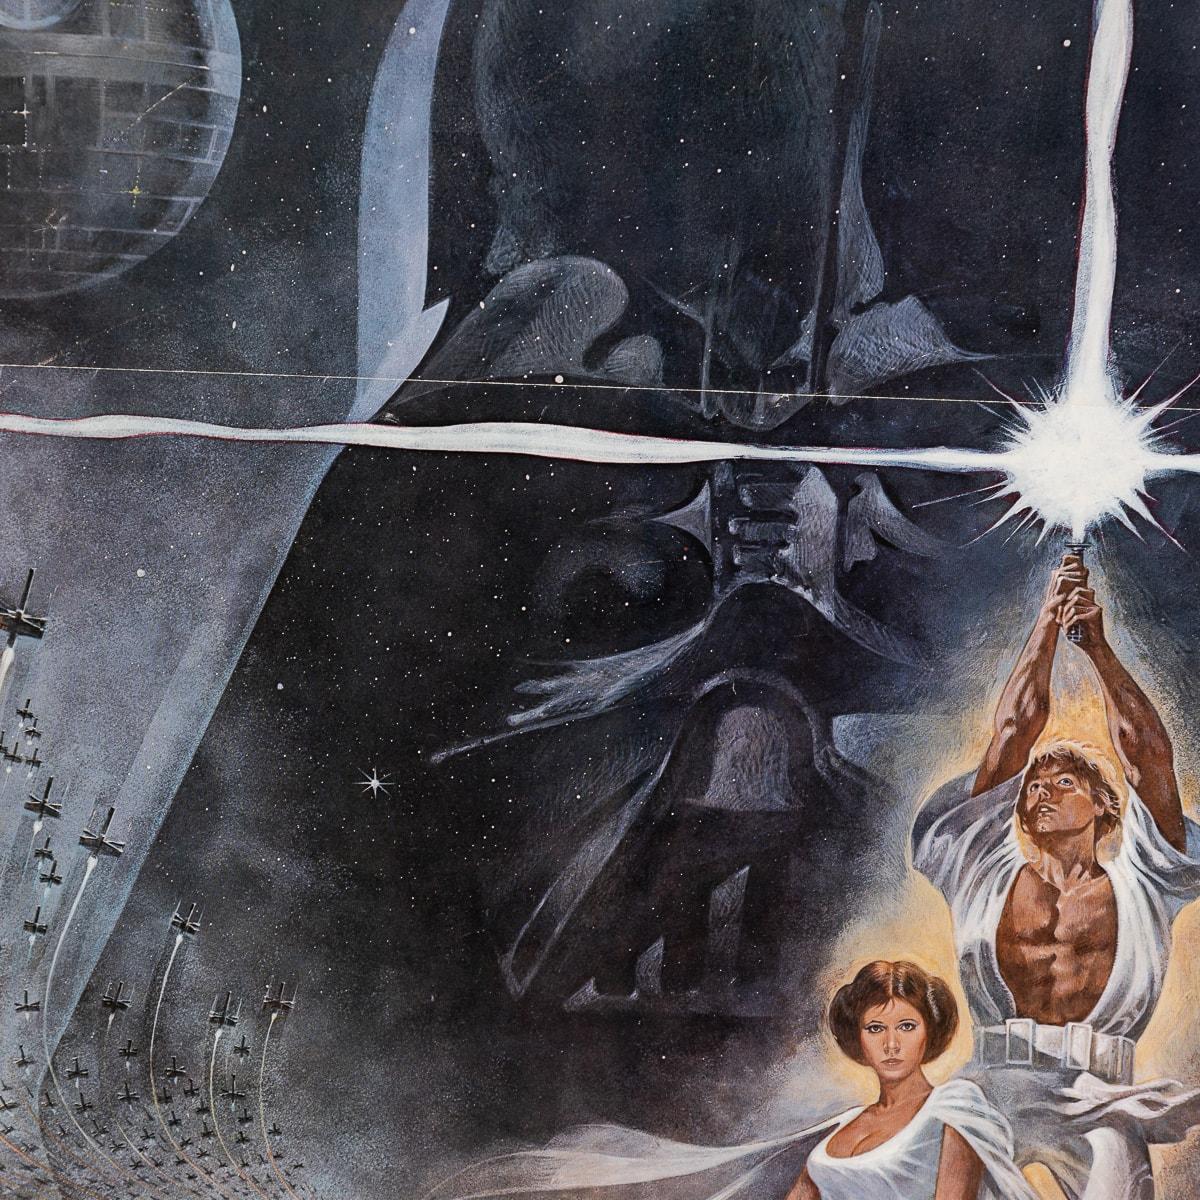 Original U.S. release Star Wars „A New Hope“-Poster im Stil von „A New Hope“, 77/21, ca. 1977, Original (Acryl) im Angebot